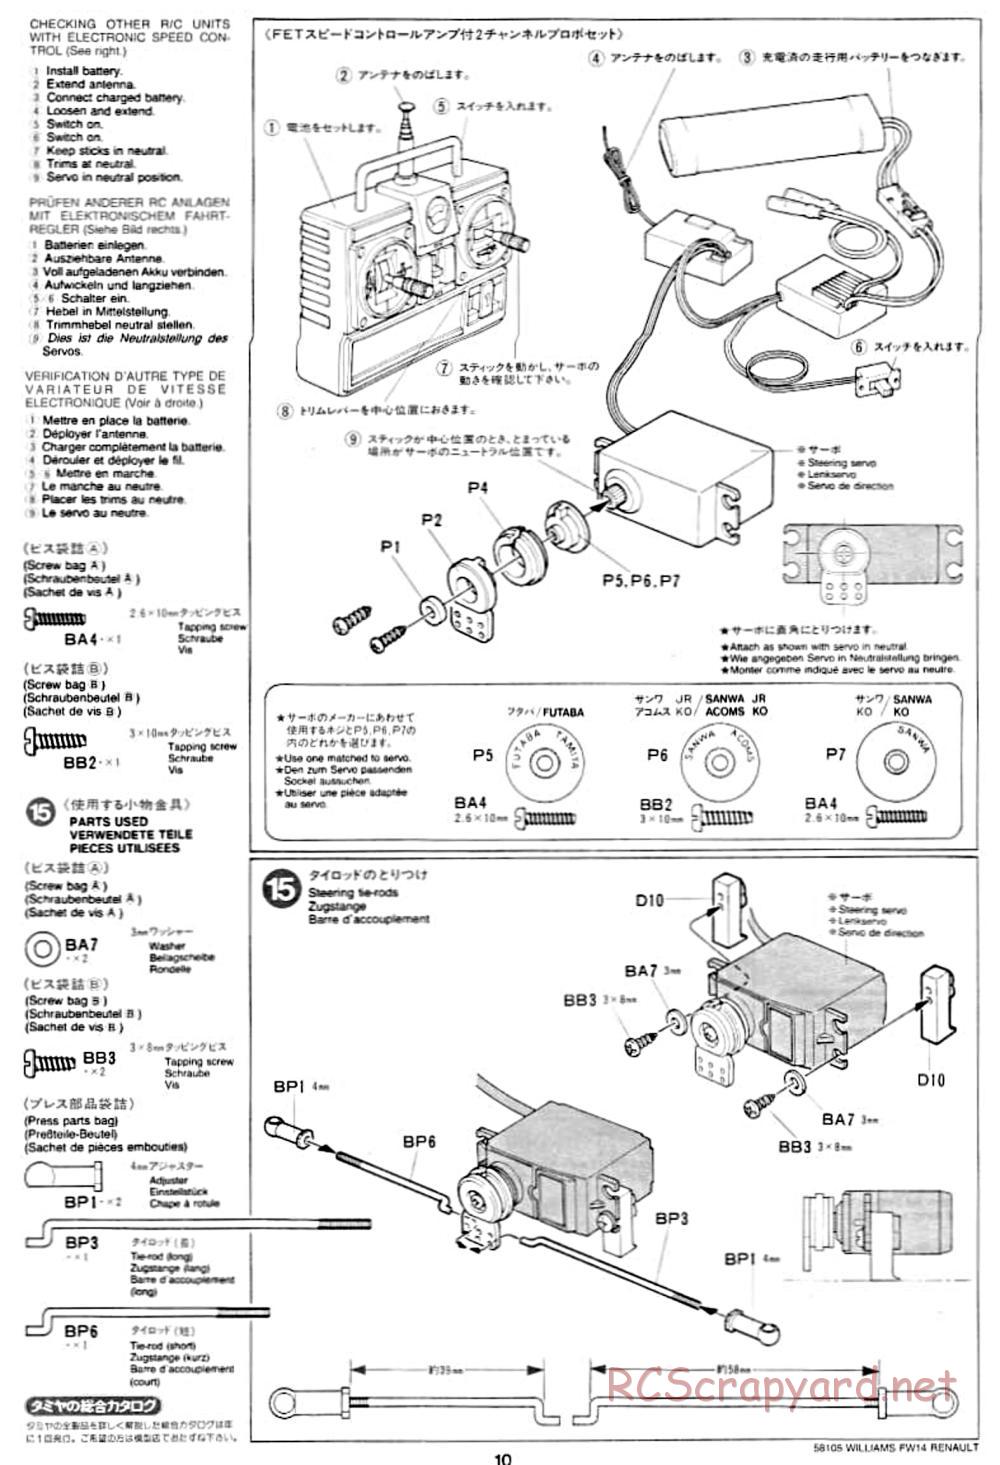 Tamiya - Williams FW14 Renault - F102 Chassis - Manual - Page 10